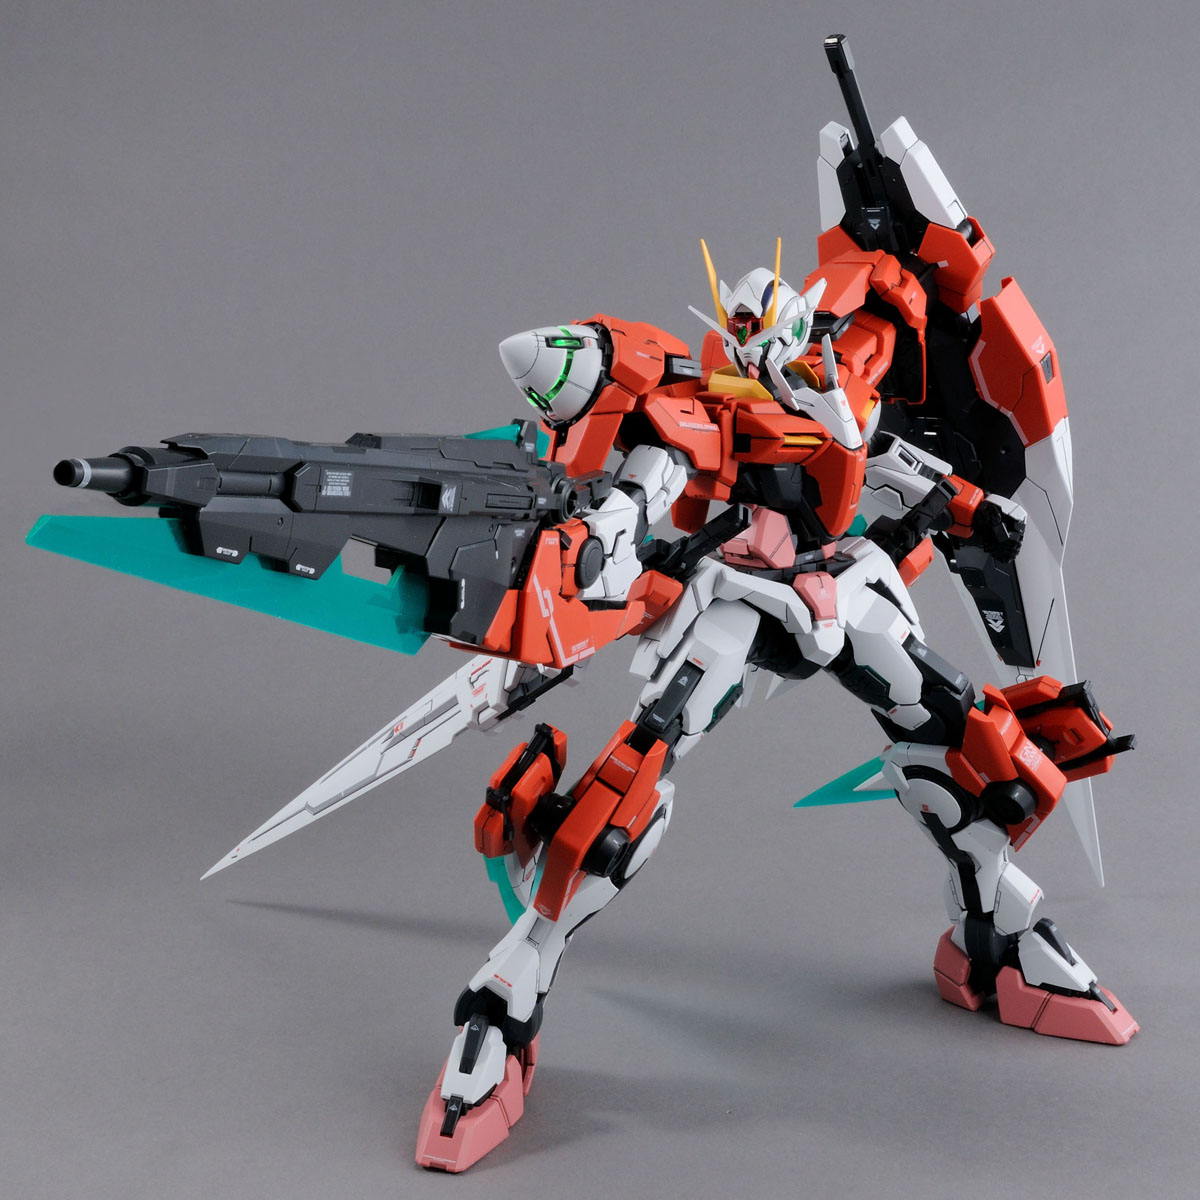 Pg 1 60 00gundam Seven Sword G Inspection Gundam Premium Bandai Singapore Online Store For Action Figures Model Kits Toys And More